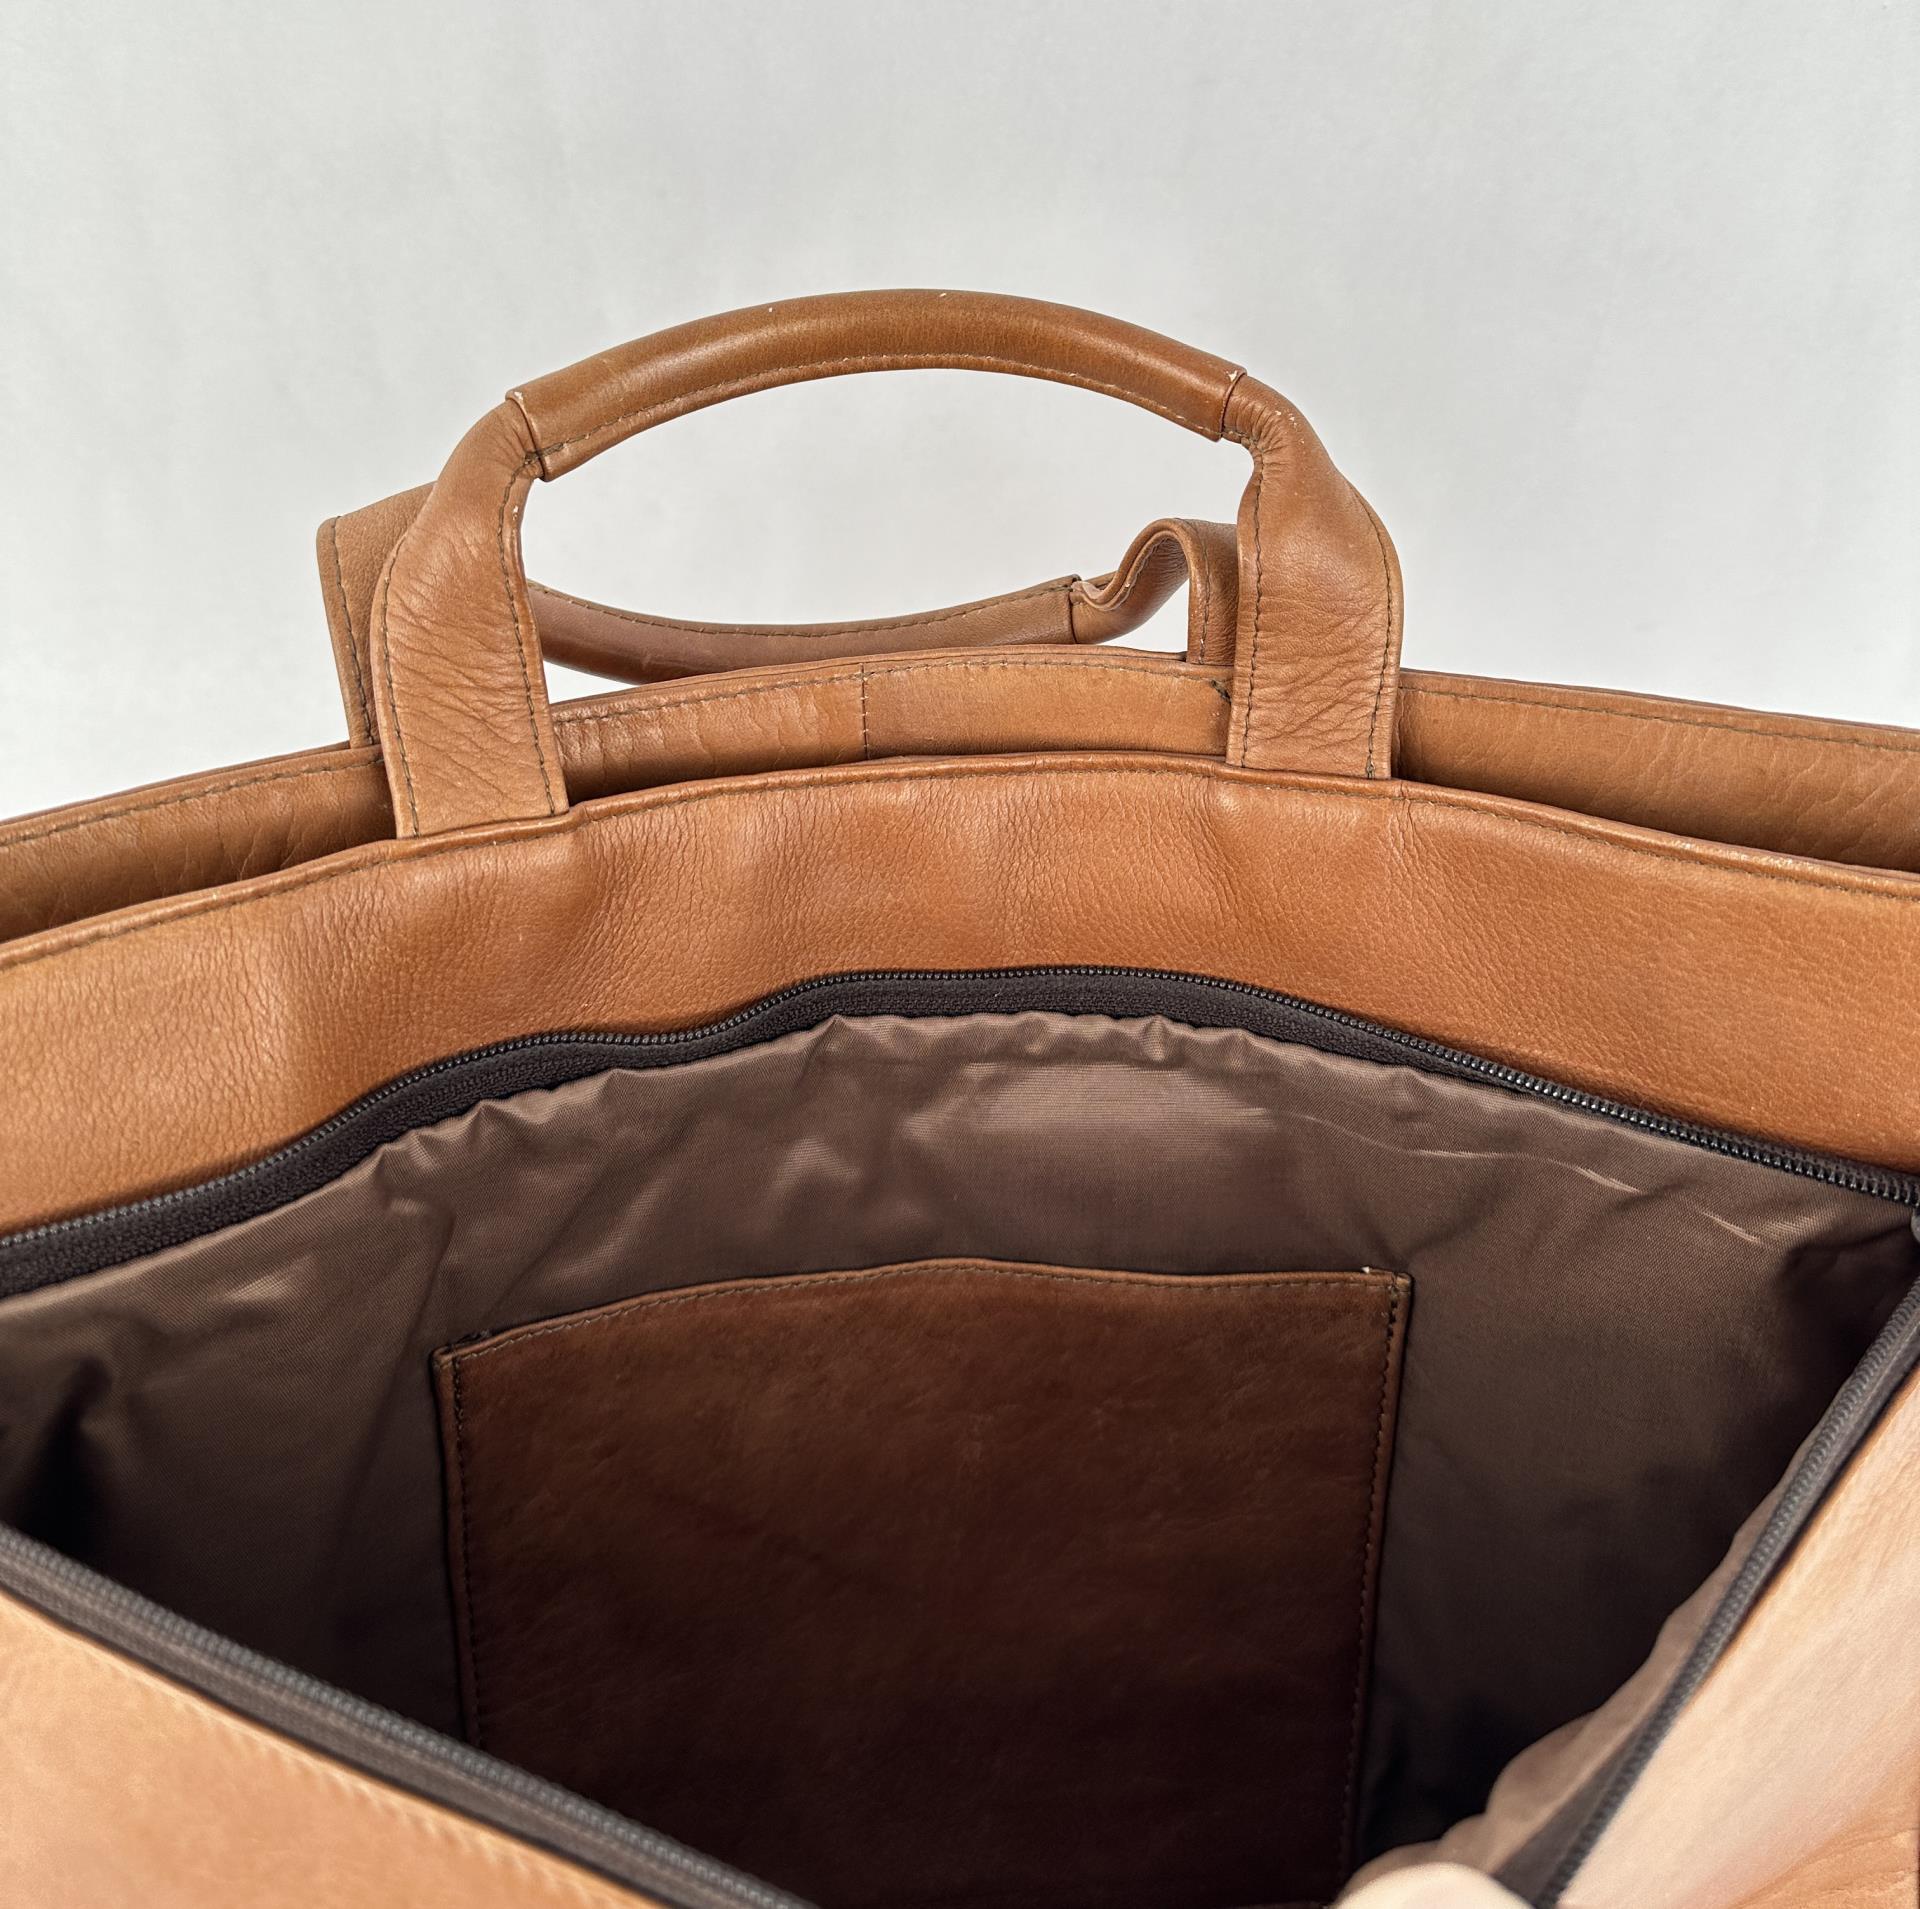 Latico Leather Company Steer Hide Satchel Bag